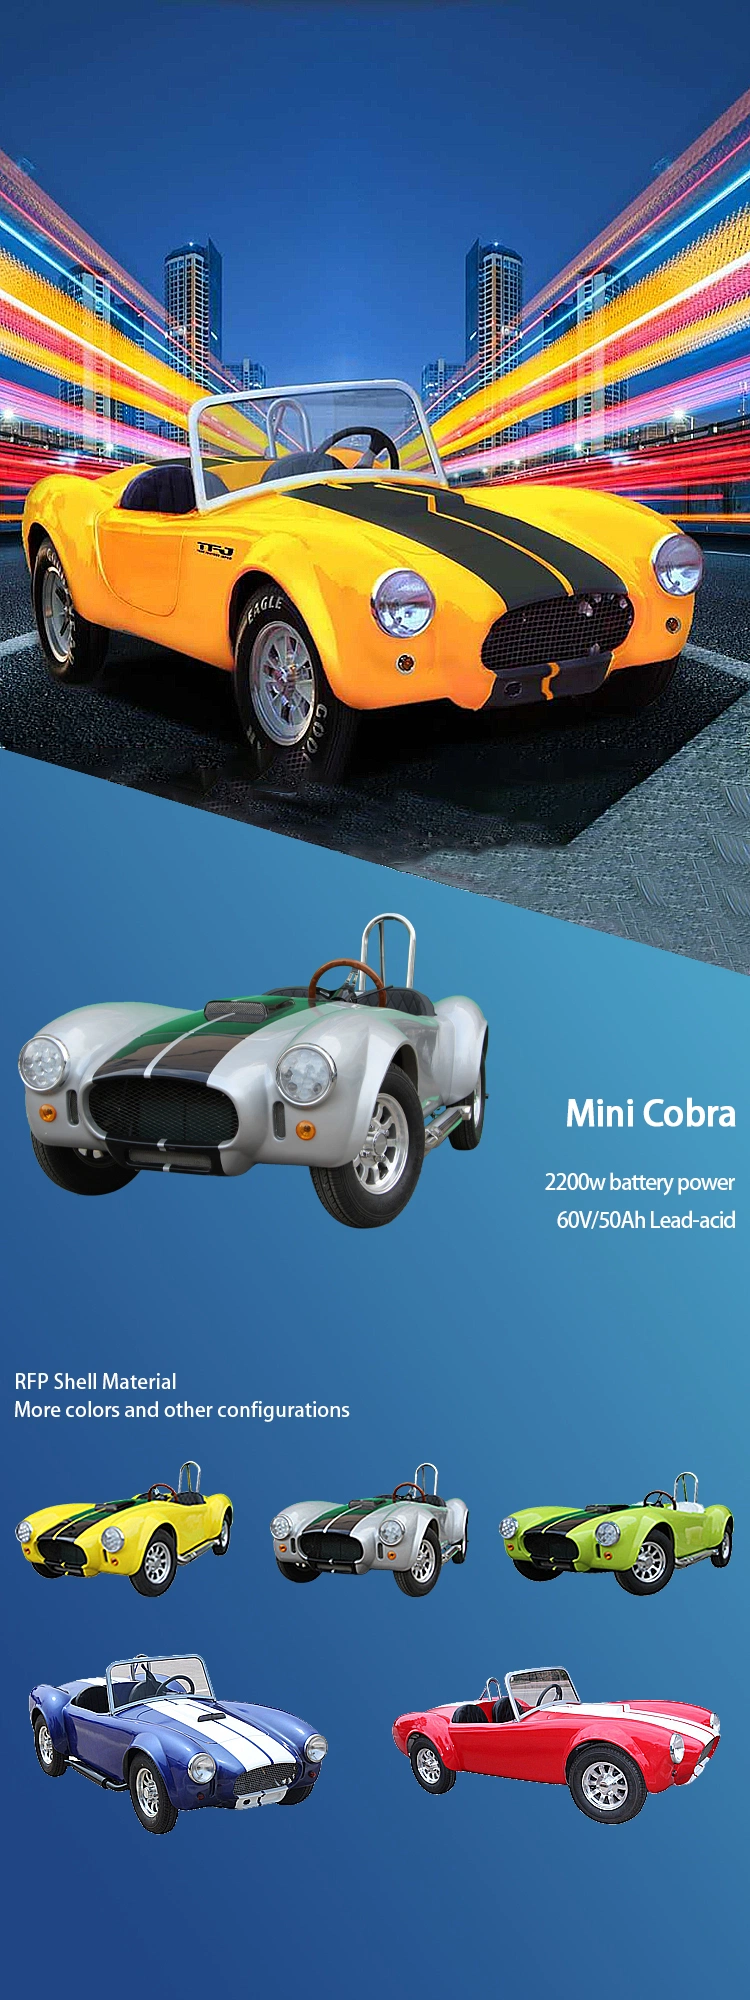 New Widen 2200W Powered Automatic Quad Car Mini Cobra for Sale